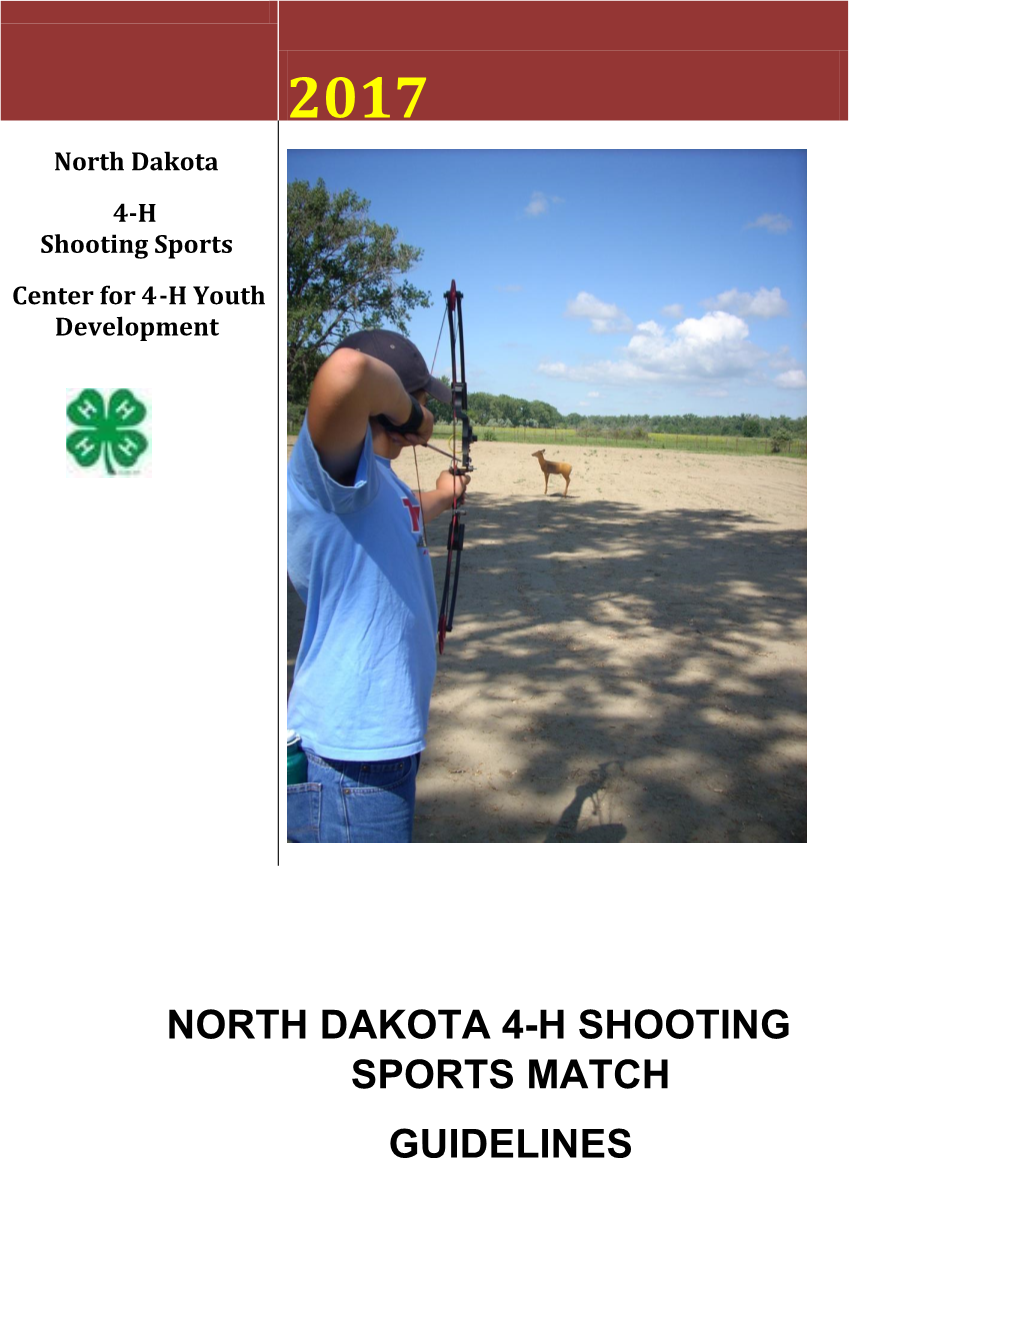 North Dakota 4-H Shooting Sports Match Guidelines